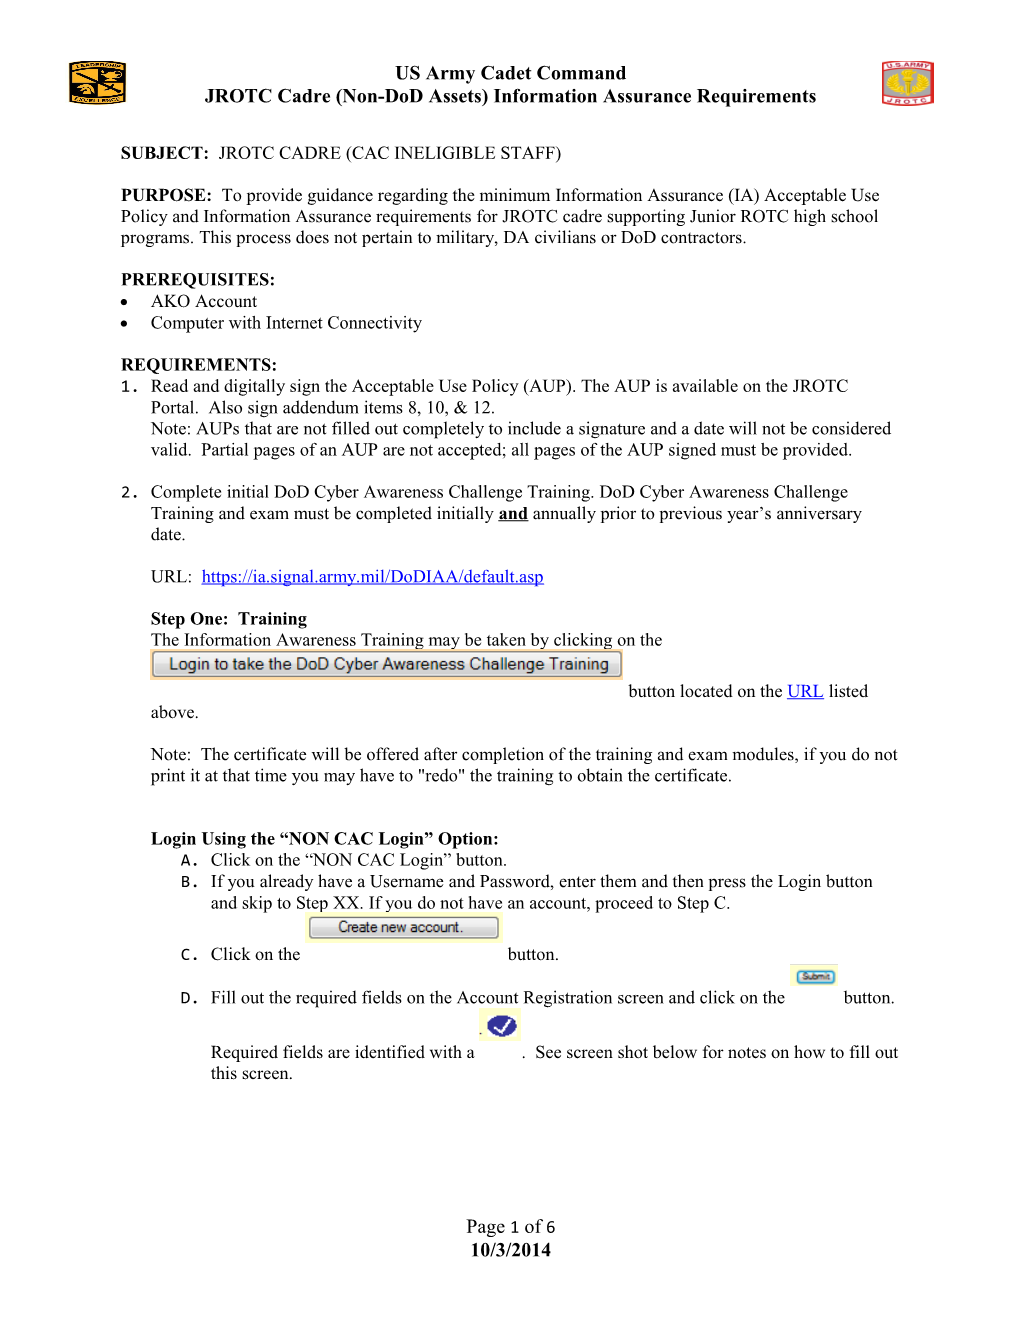 JROTC Cadre (Non-Dod Assets) Information Assurance Requirements